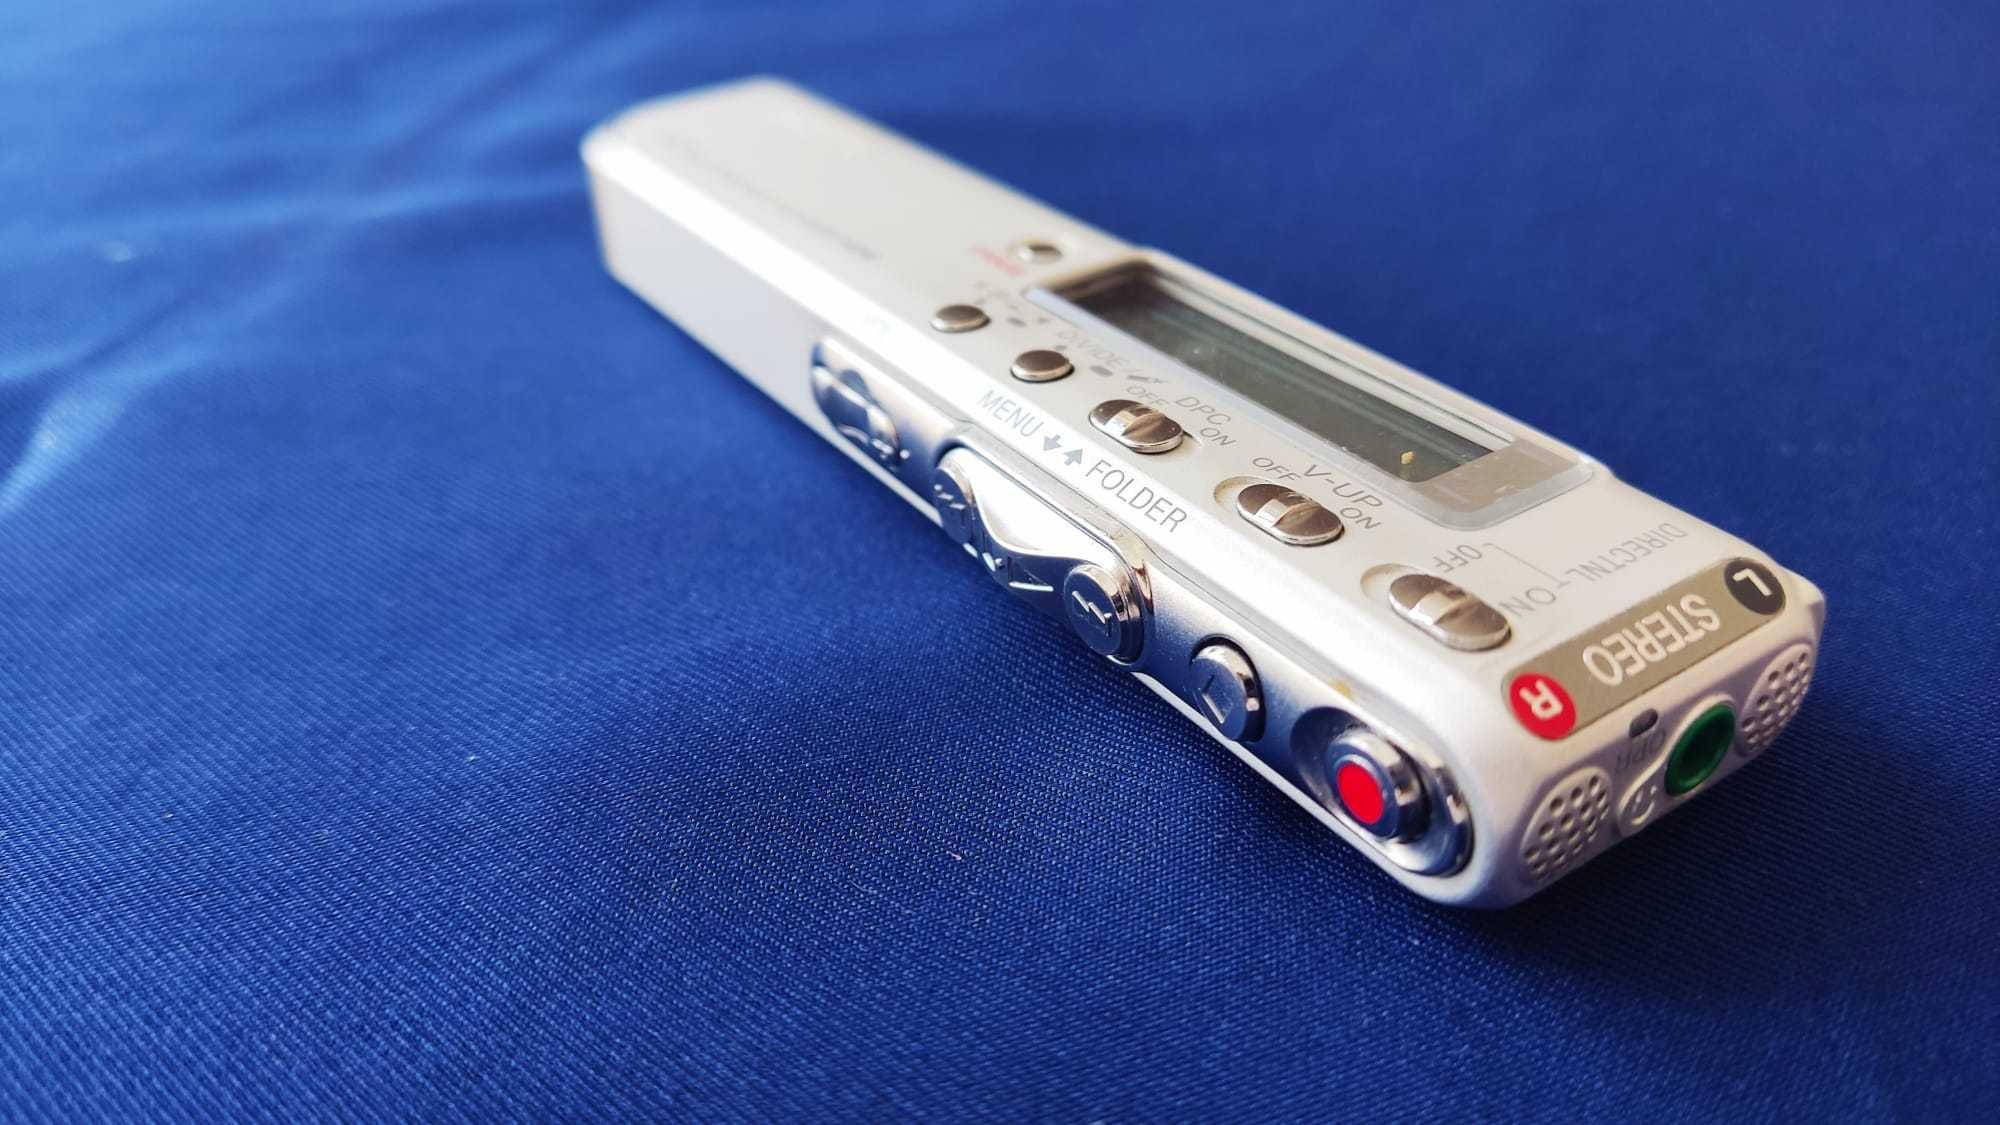 DYKTAFON cyfrowy SONY model ICD-SX35 kolor srebrny stan idealny!